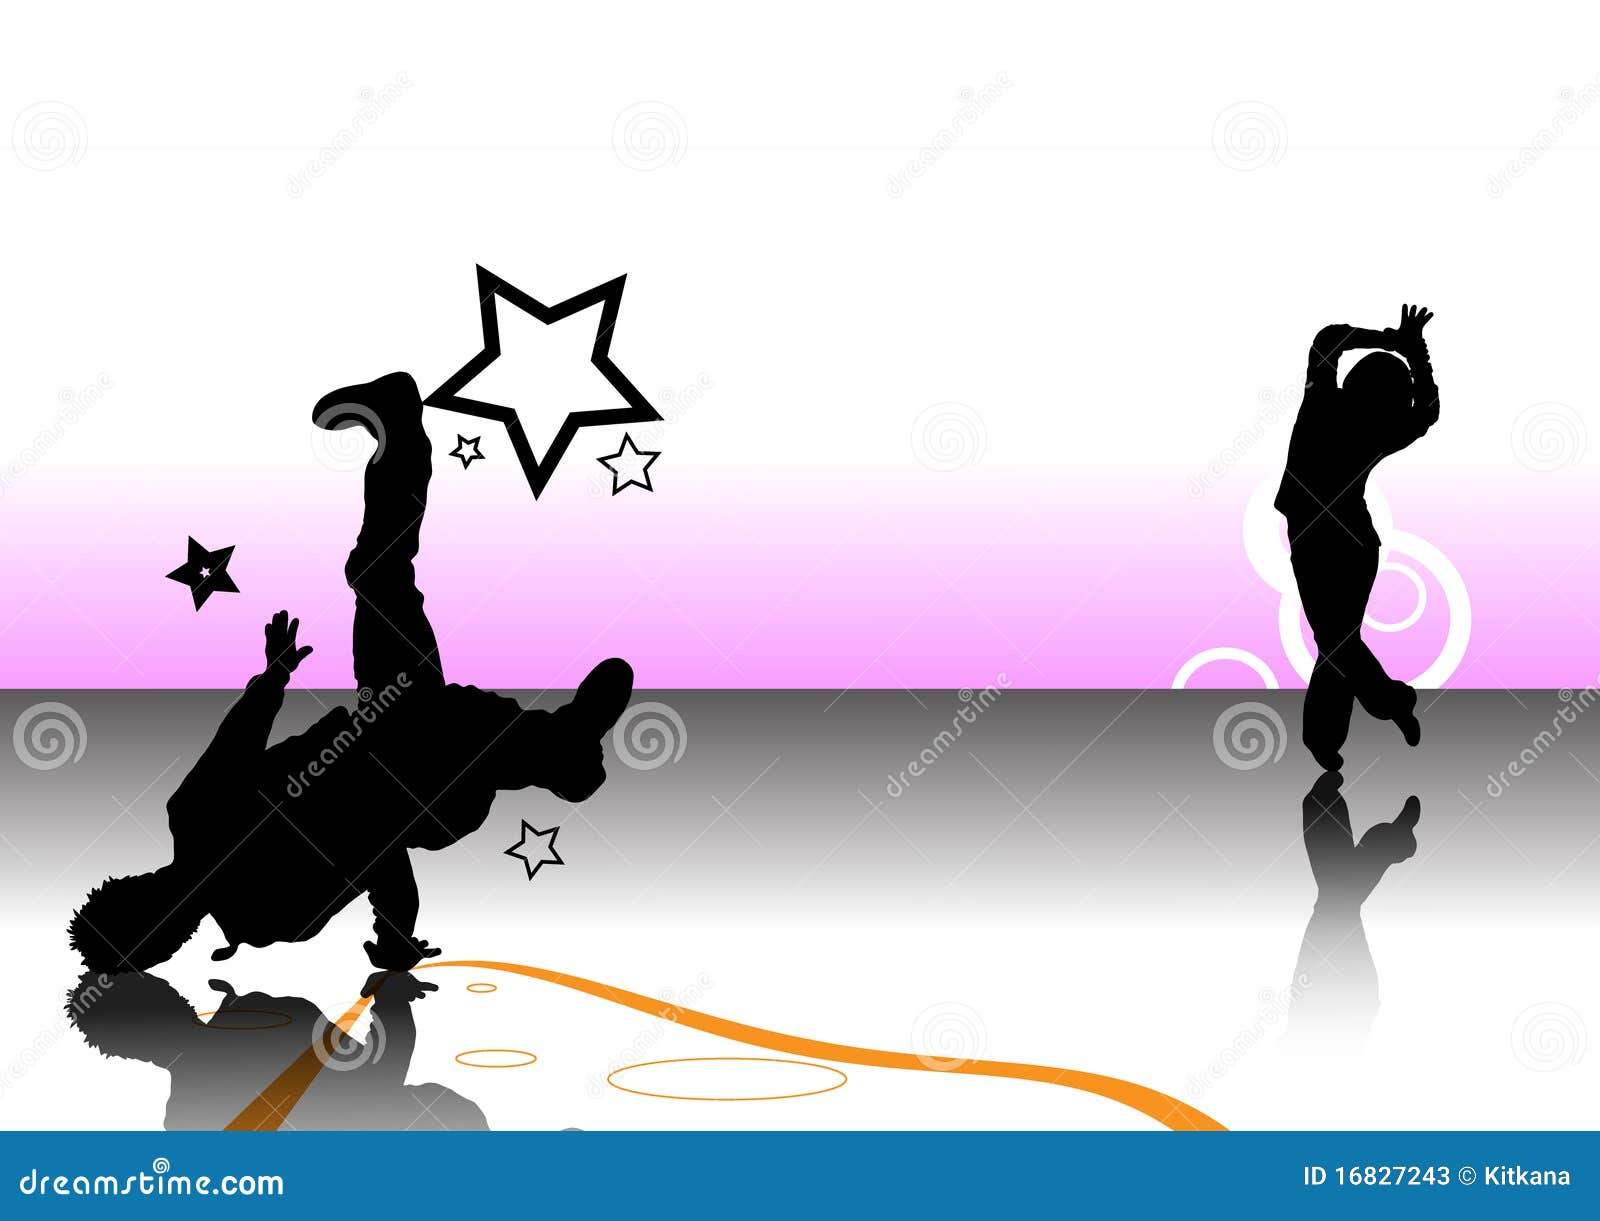 Two Dancer Background Design Stock Vector  Illustration of gradient design  16827243